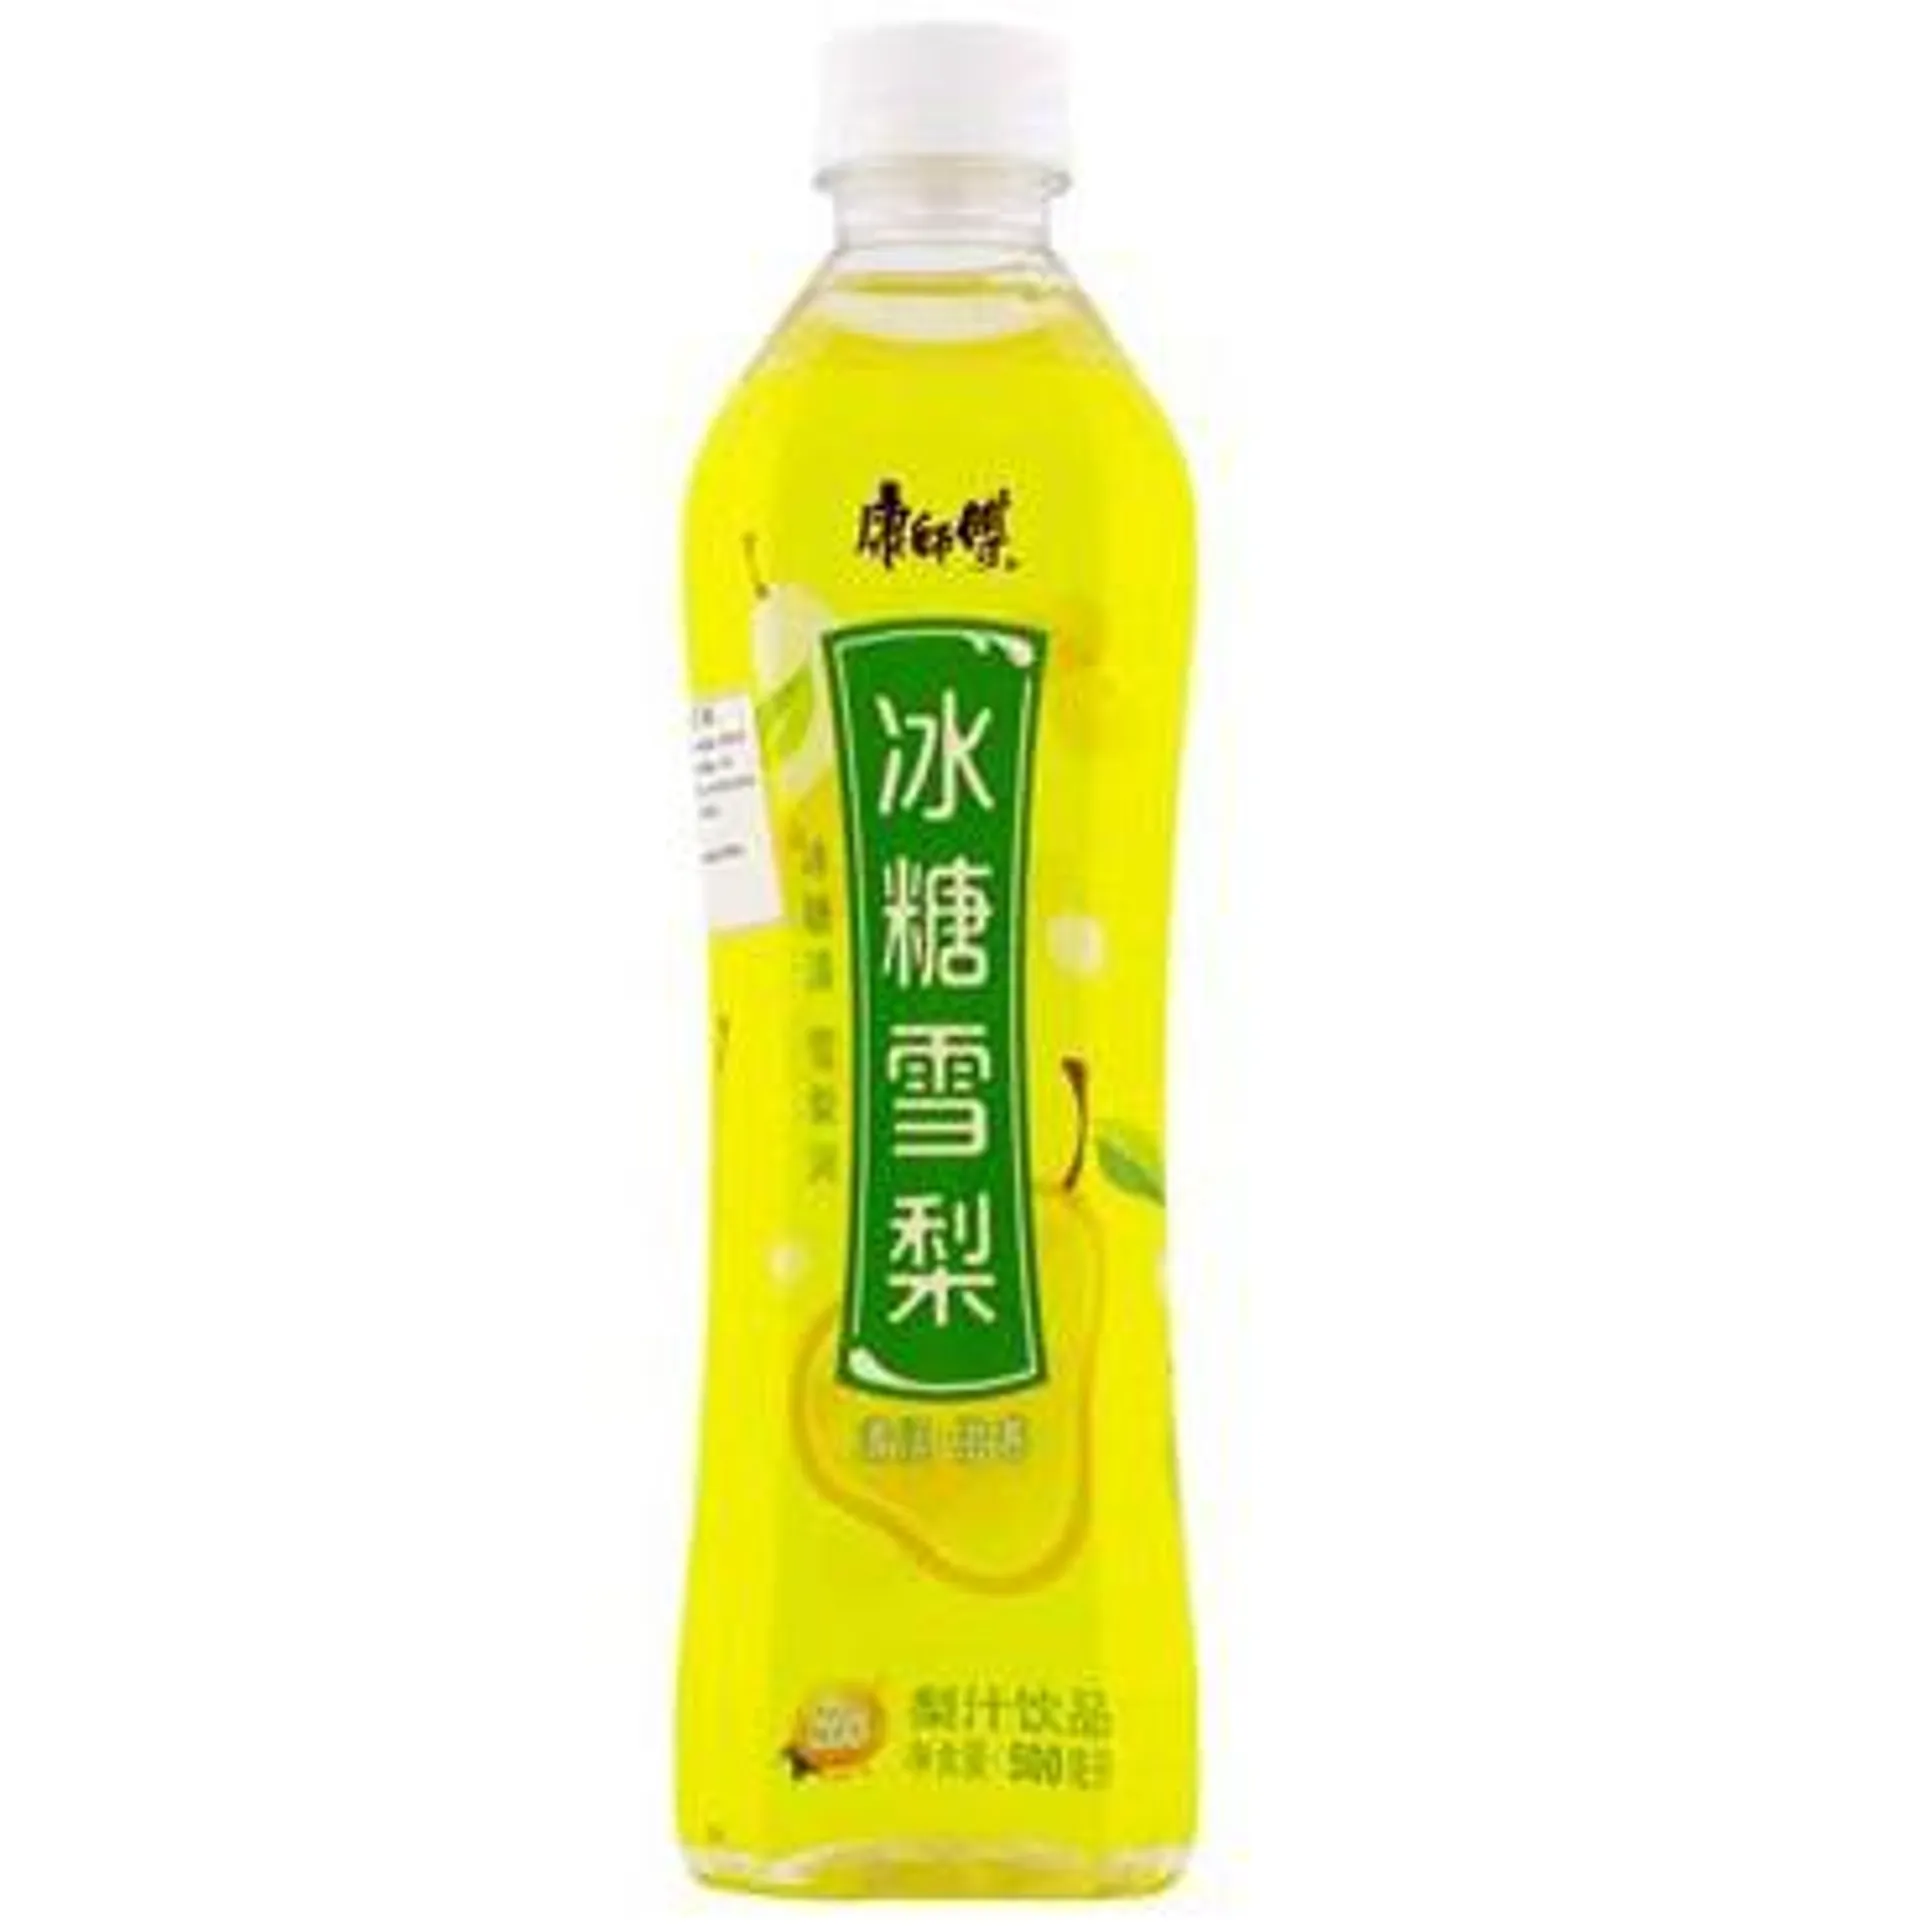 MasterKong rock sugar pear drink - 500ml